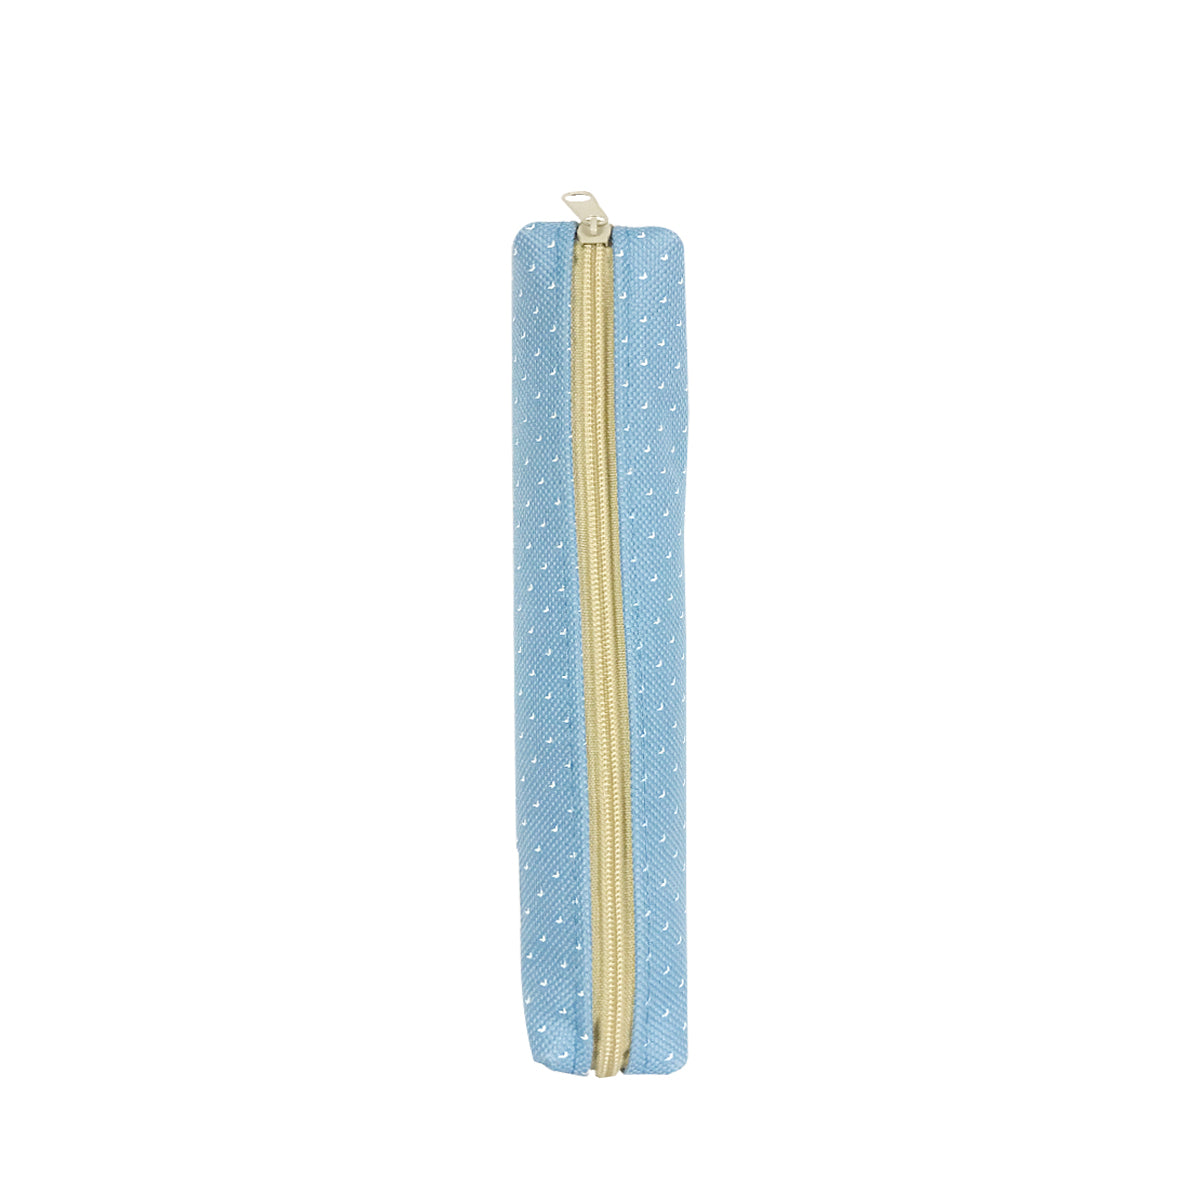 Wrapables Slim Dot Pencil Case (Set of 3)